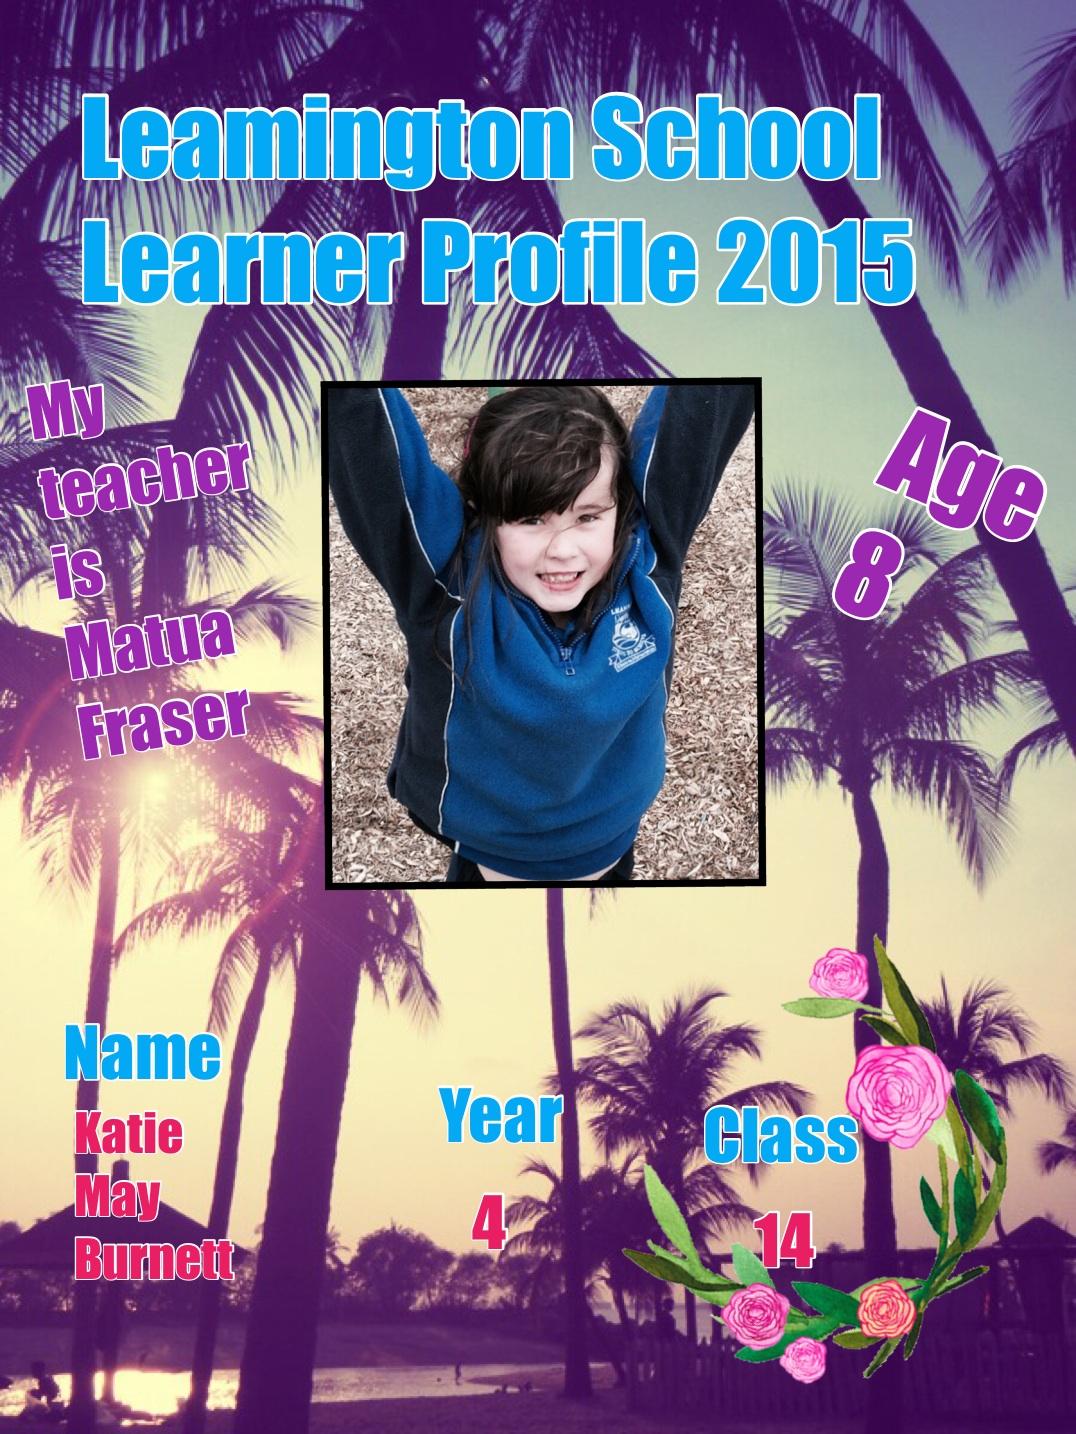 Leamington School learner profile 2015